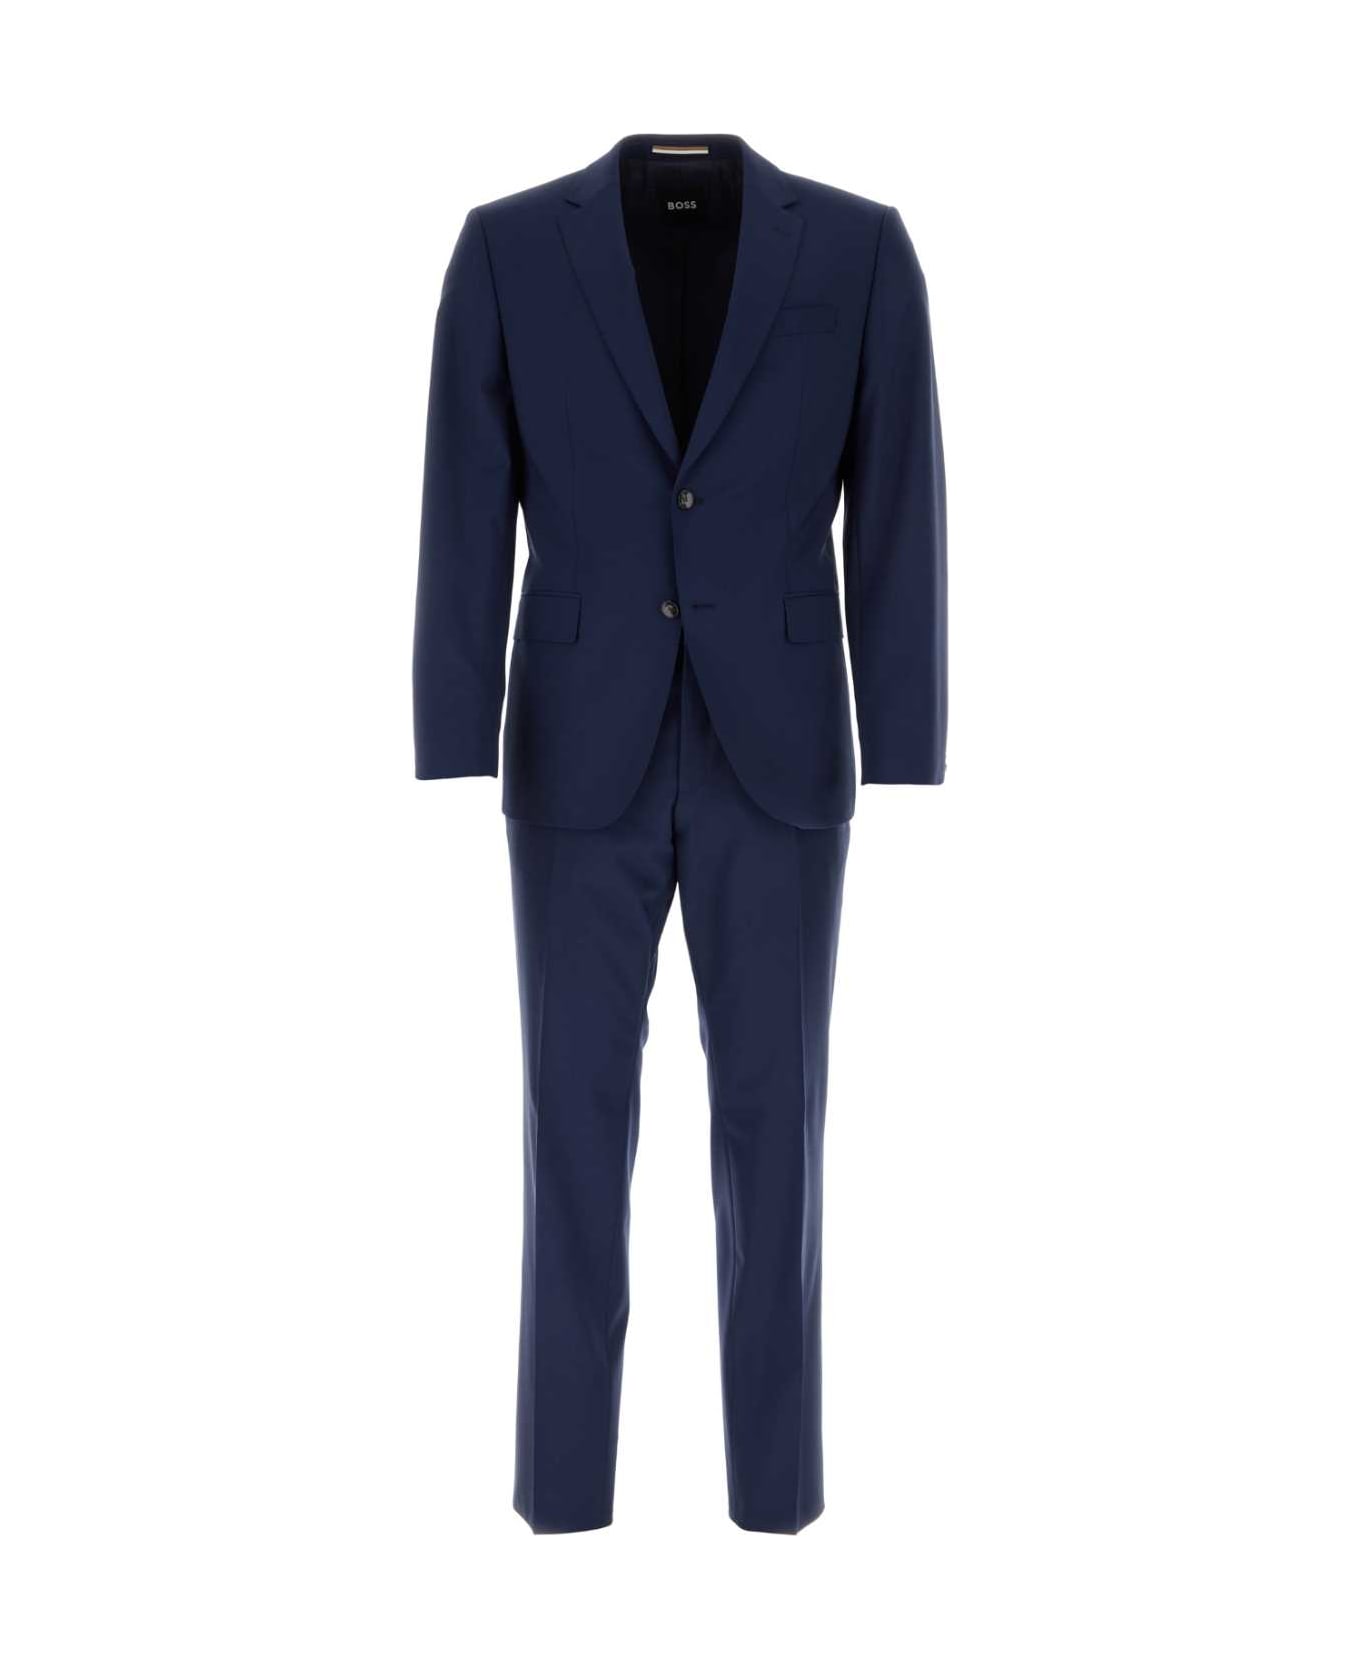 Hugo Boss Blue Stretch Wool Suit - OPENBLUE